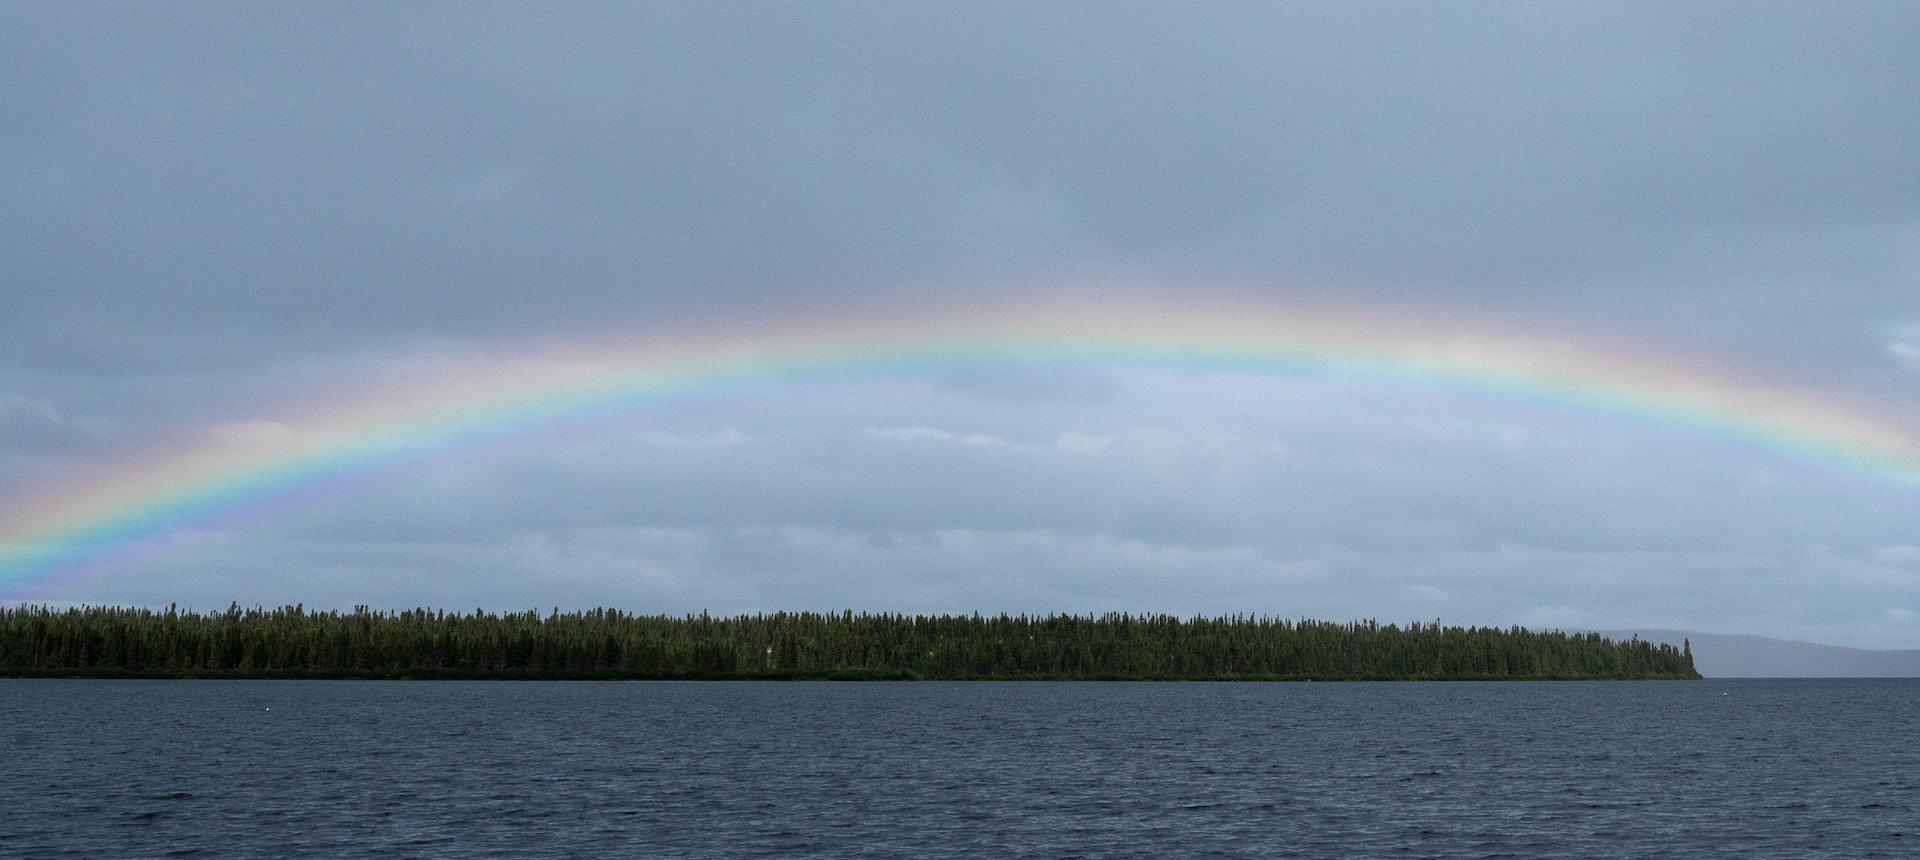 Photo of a rainbow over a lake in Naskapi.